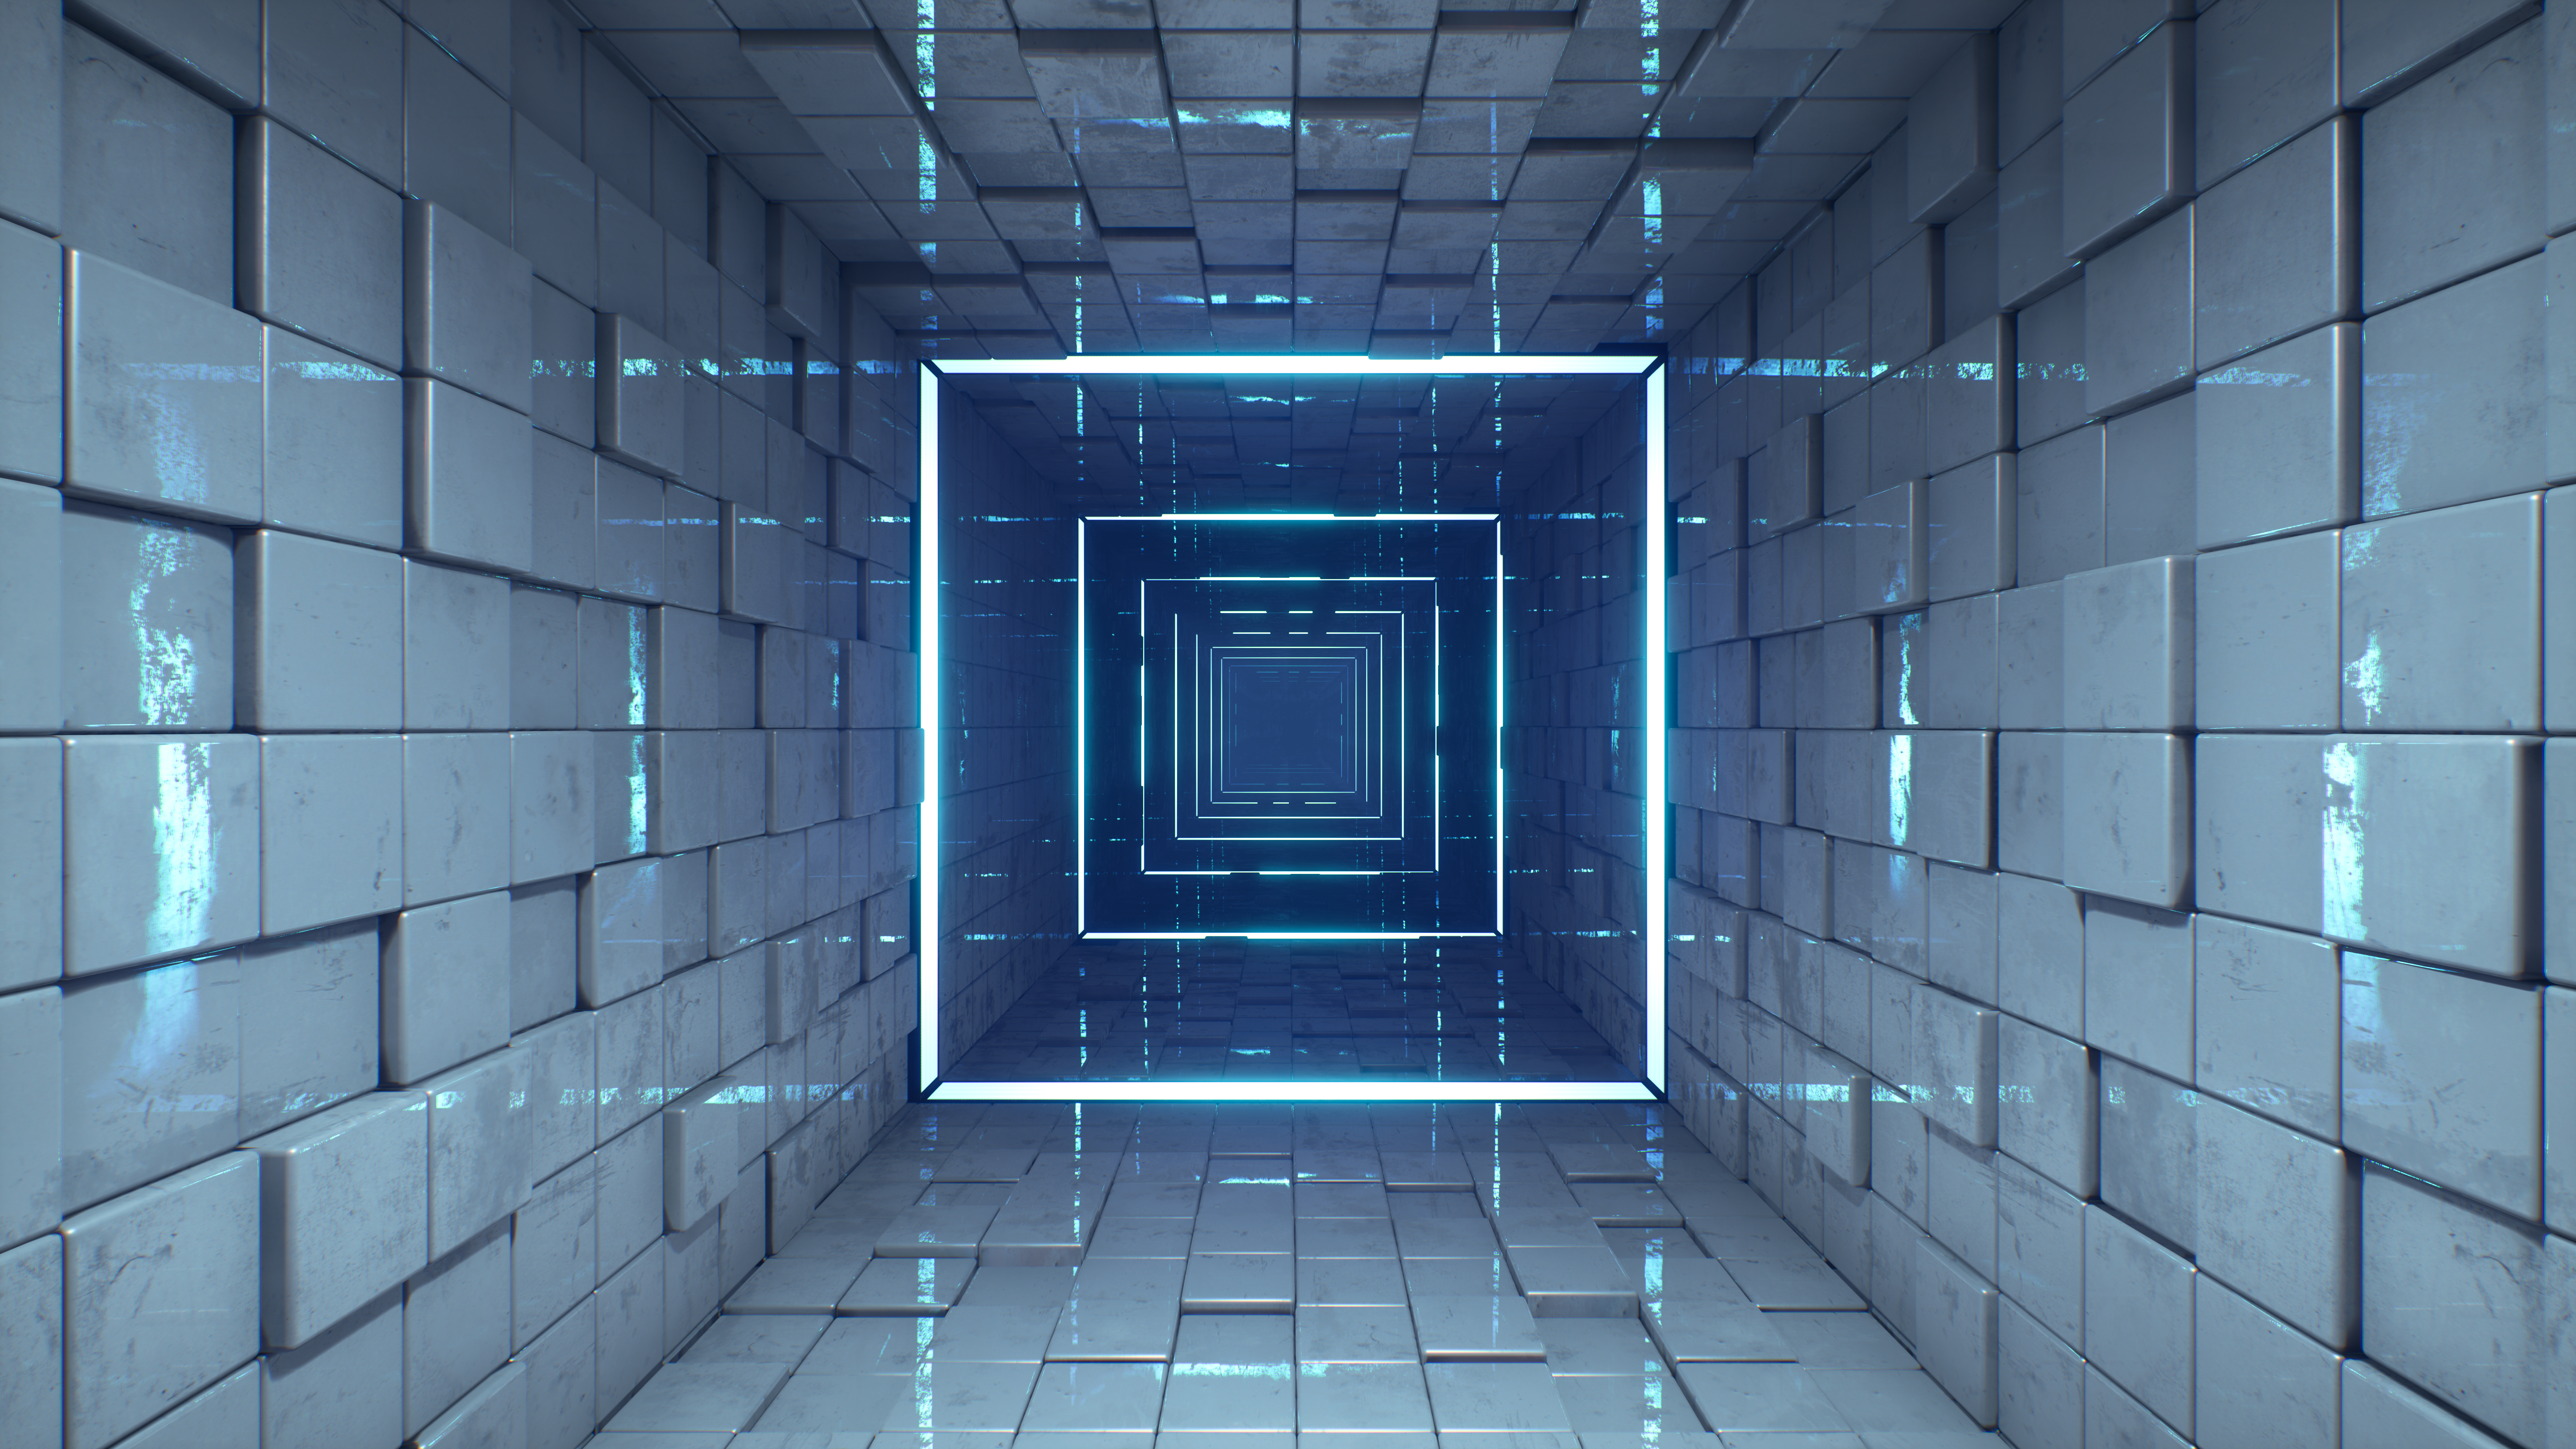 General 5760x3240 screen shot video games Q.U.B.E. 2 hallway cube video game art 3D Blocks CGI digital art